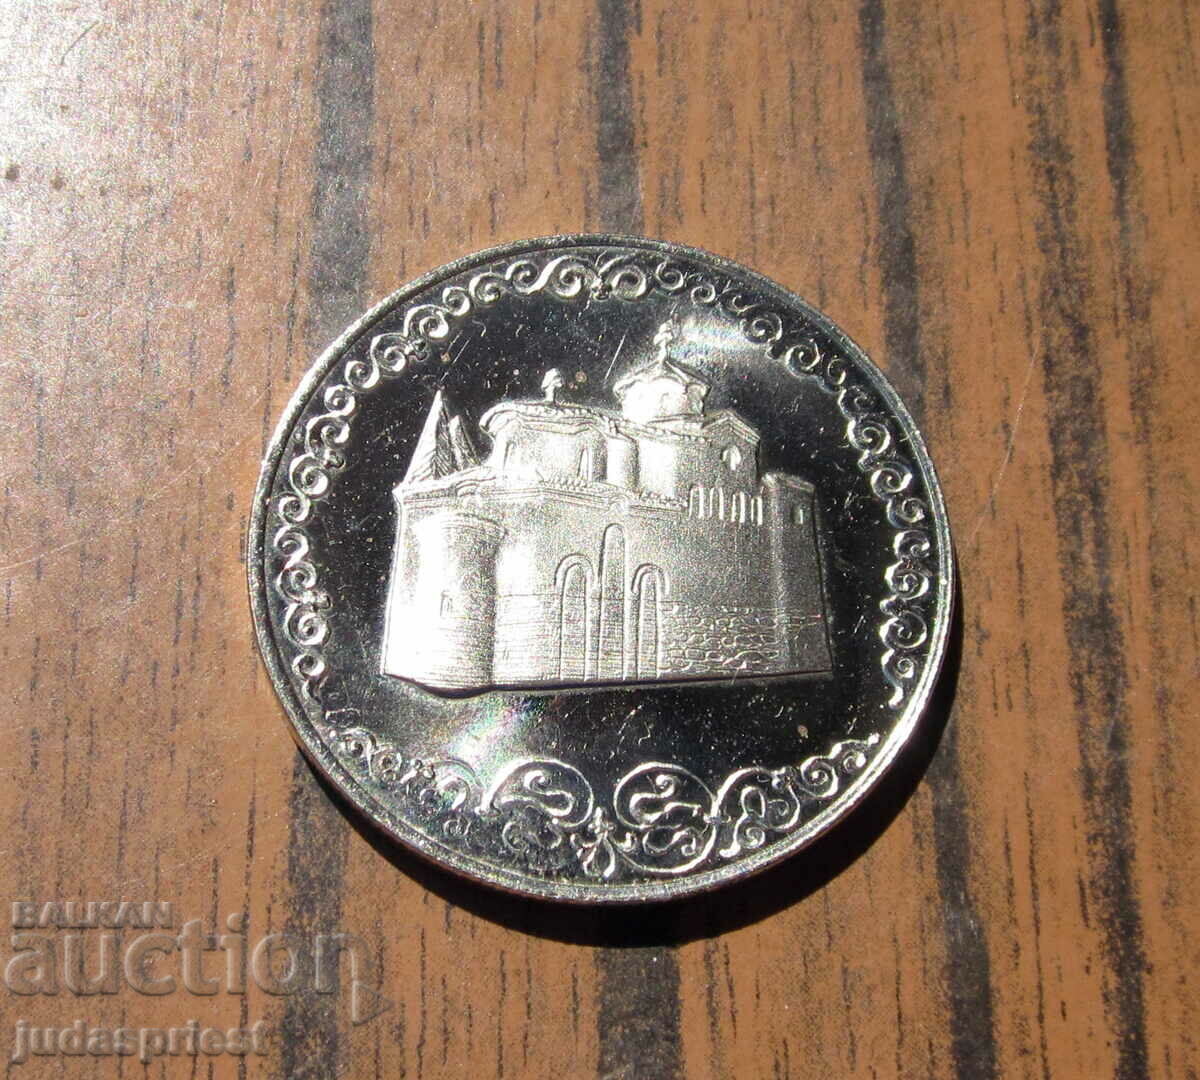 Bulgarian jubilee coin 2 BGN 1300 years Bulgaria